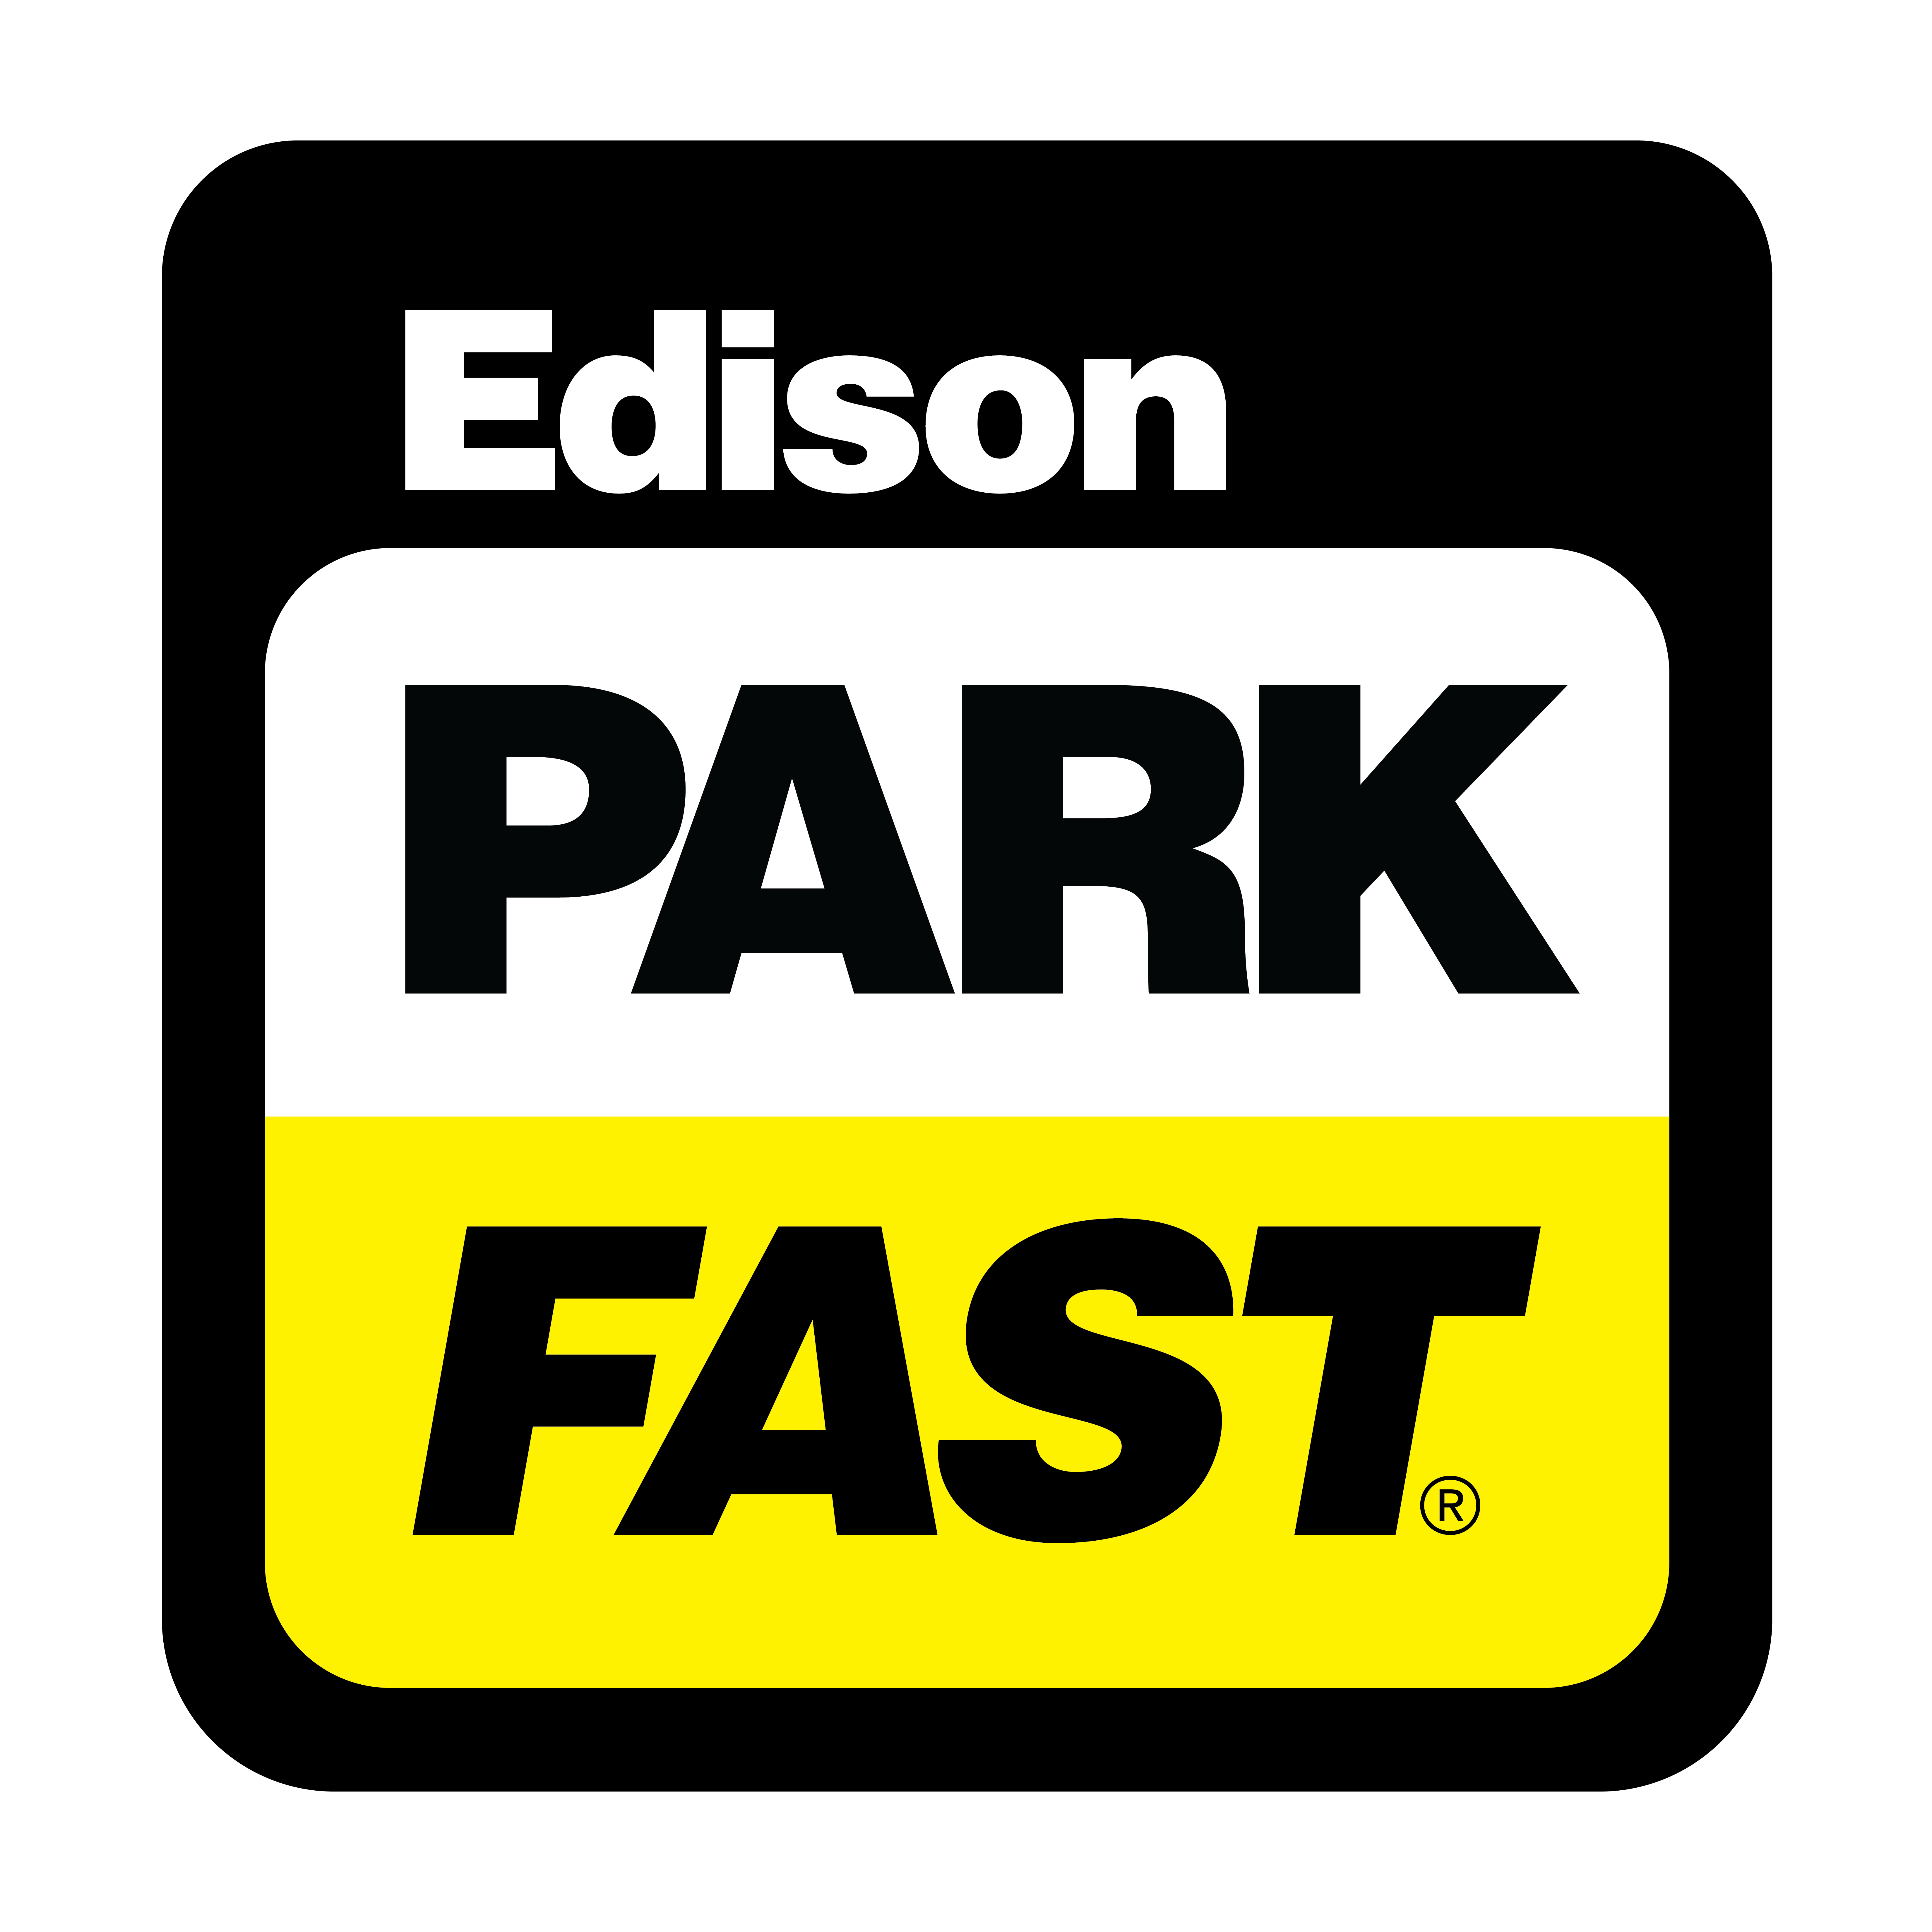 Edison ParkFast - New York, NY 10029 - (888)727-5327 | ShowMeLocal.com